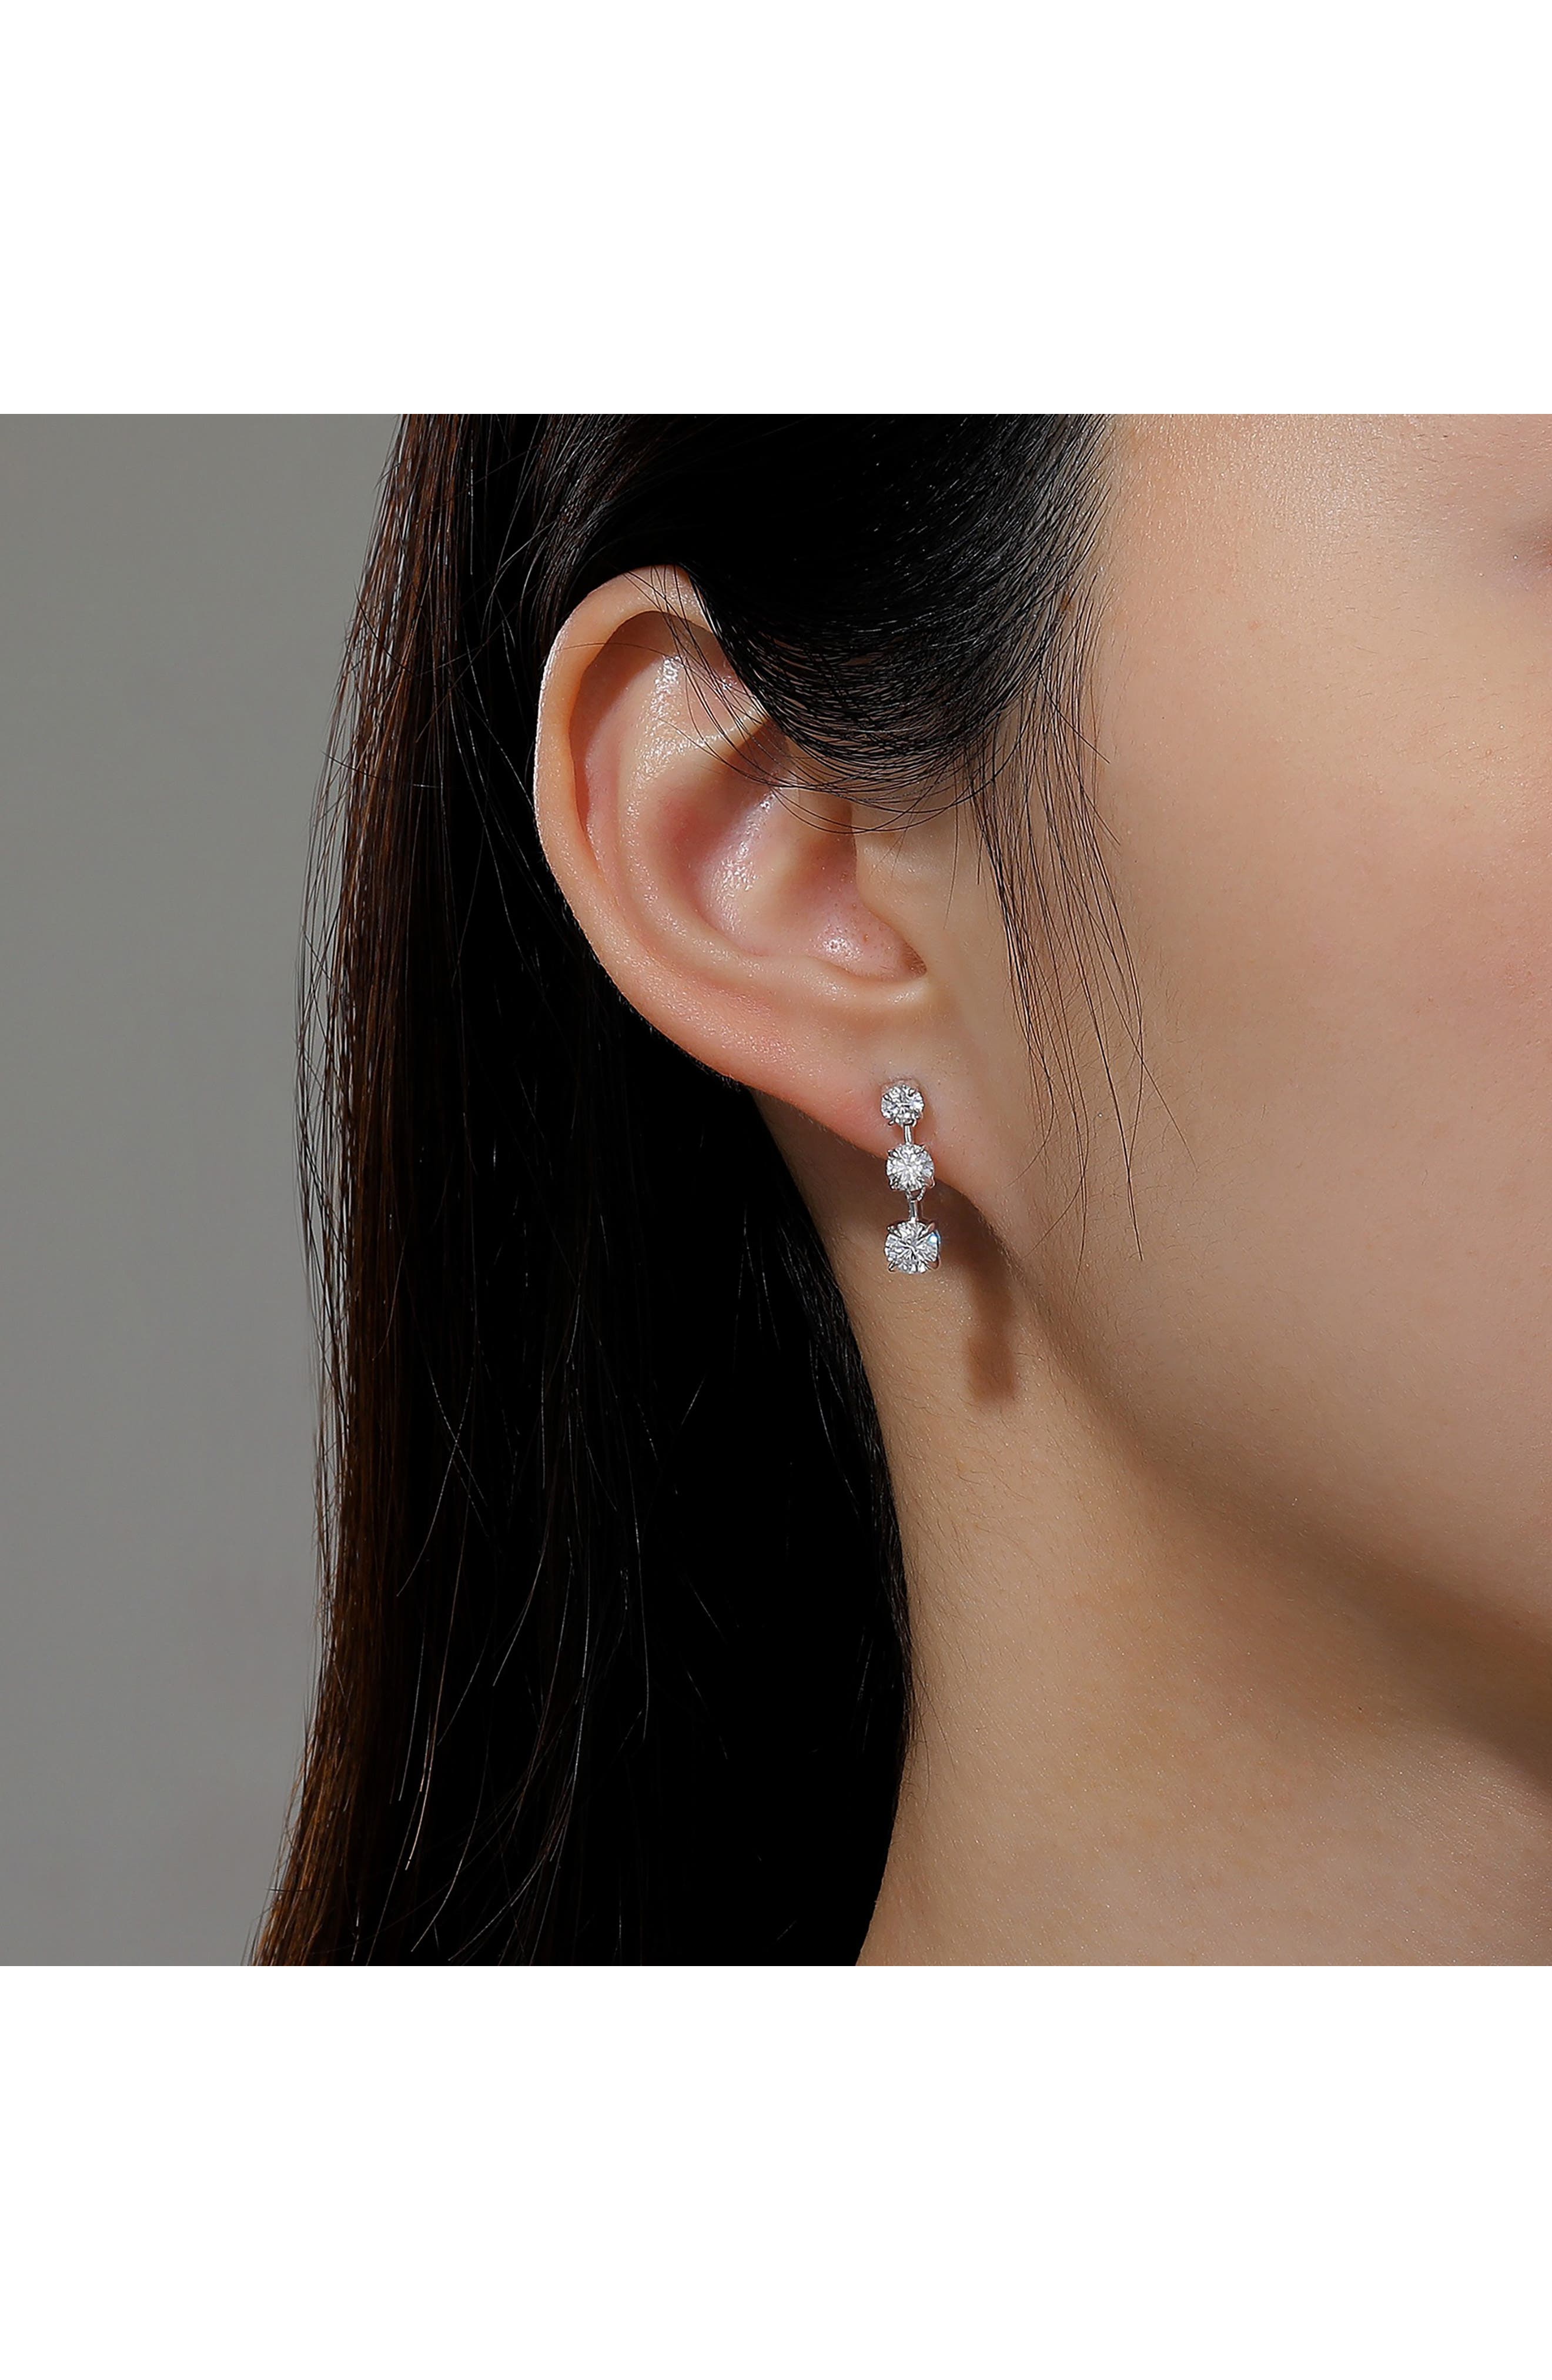 Lafonn Red Carpet Simulated Diamond Earrings Platinum-Plated CTTW: 5.82